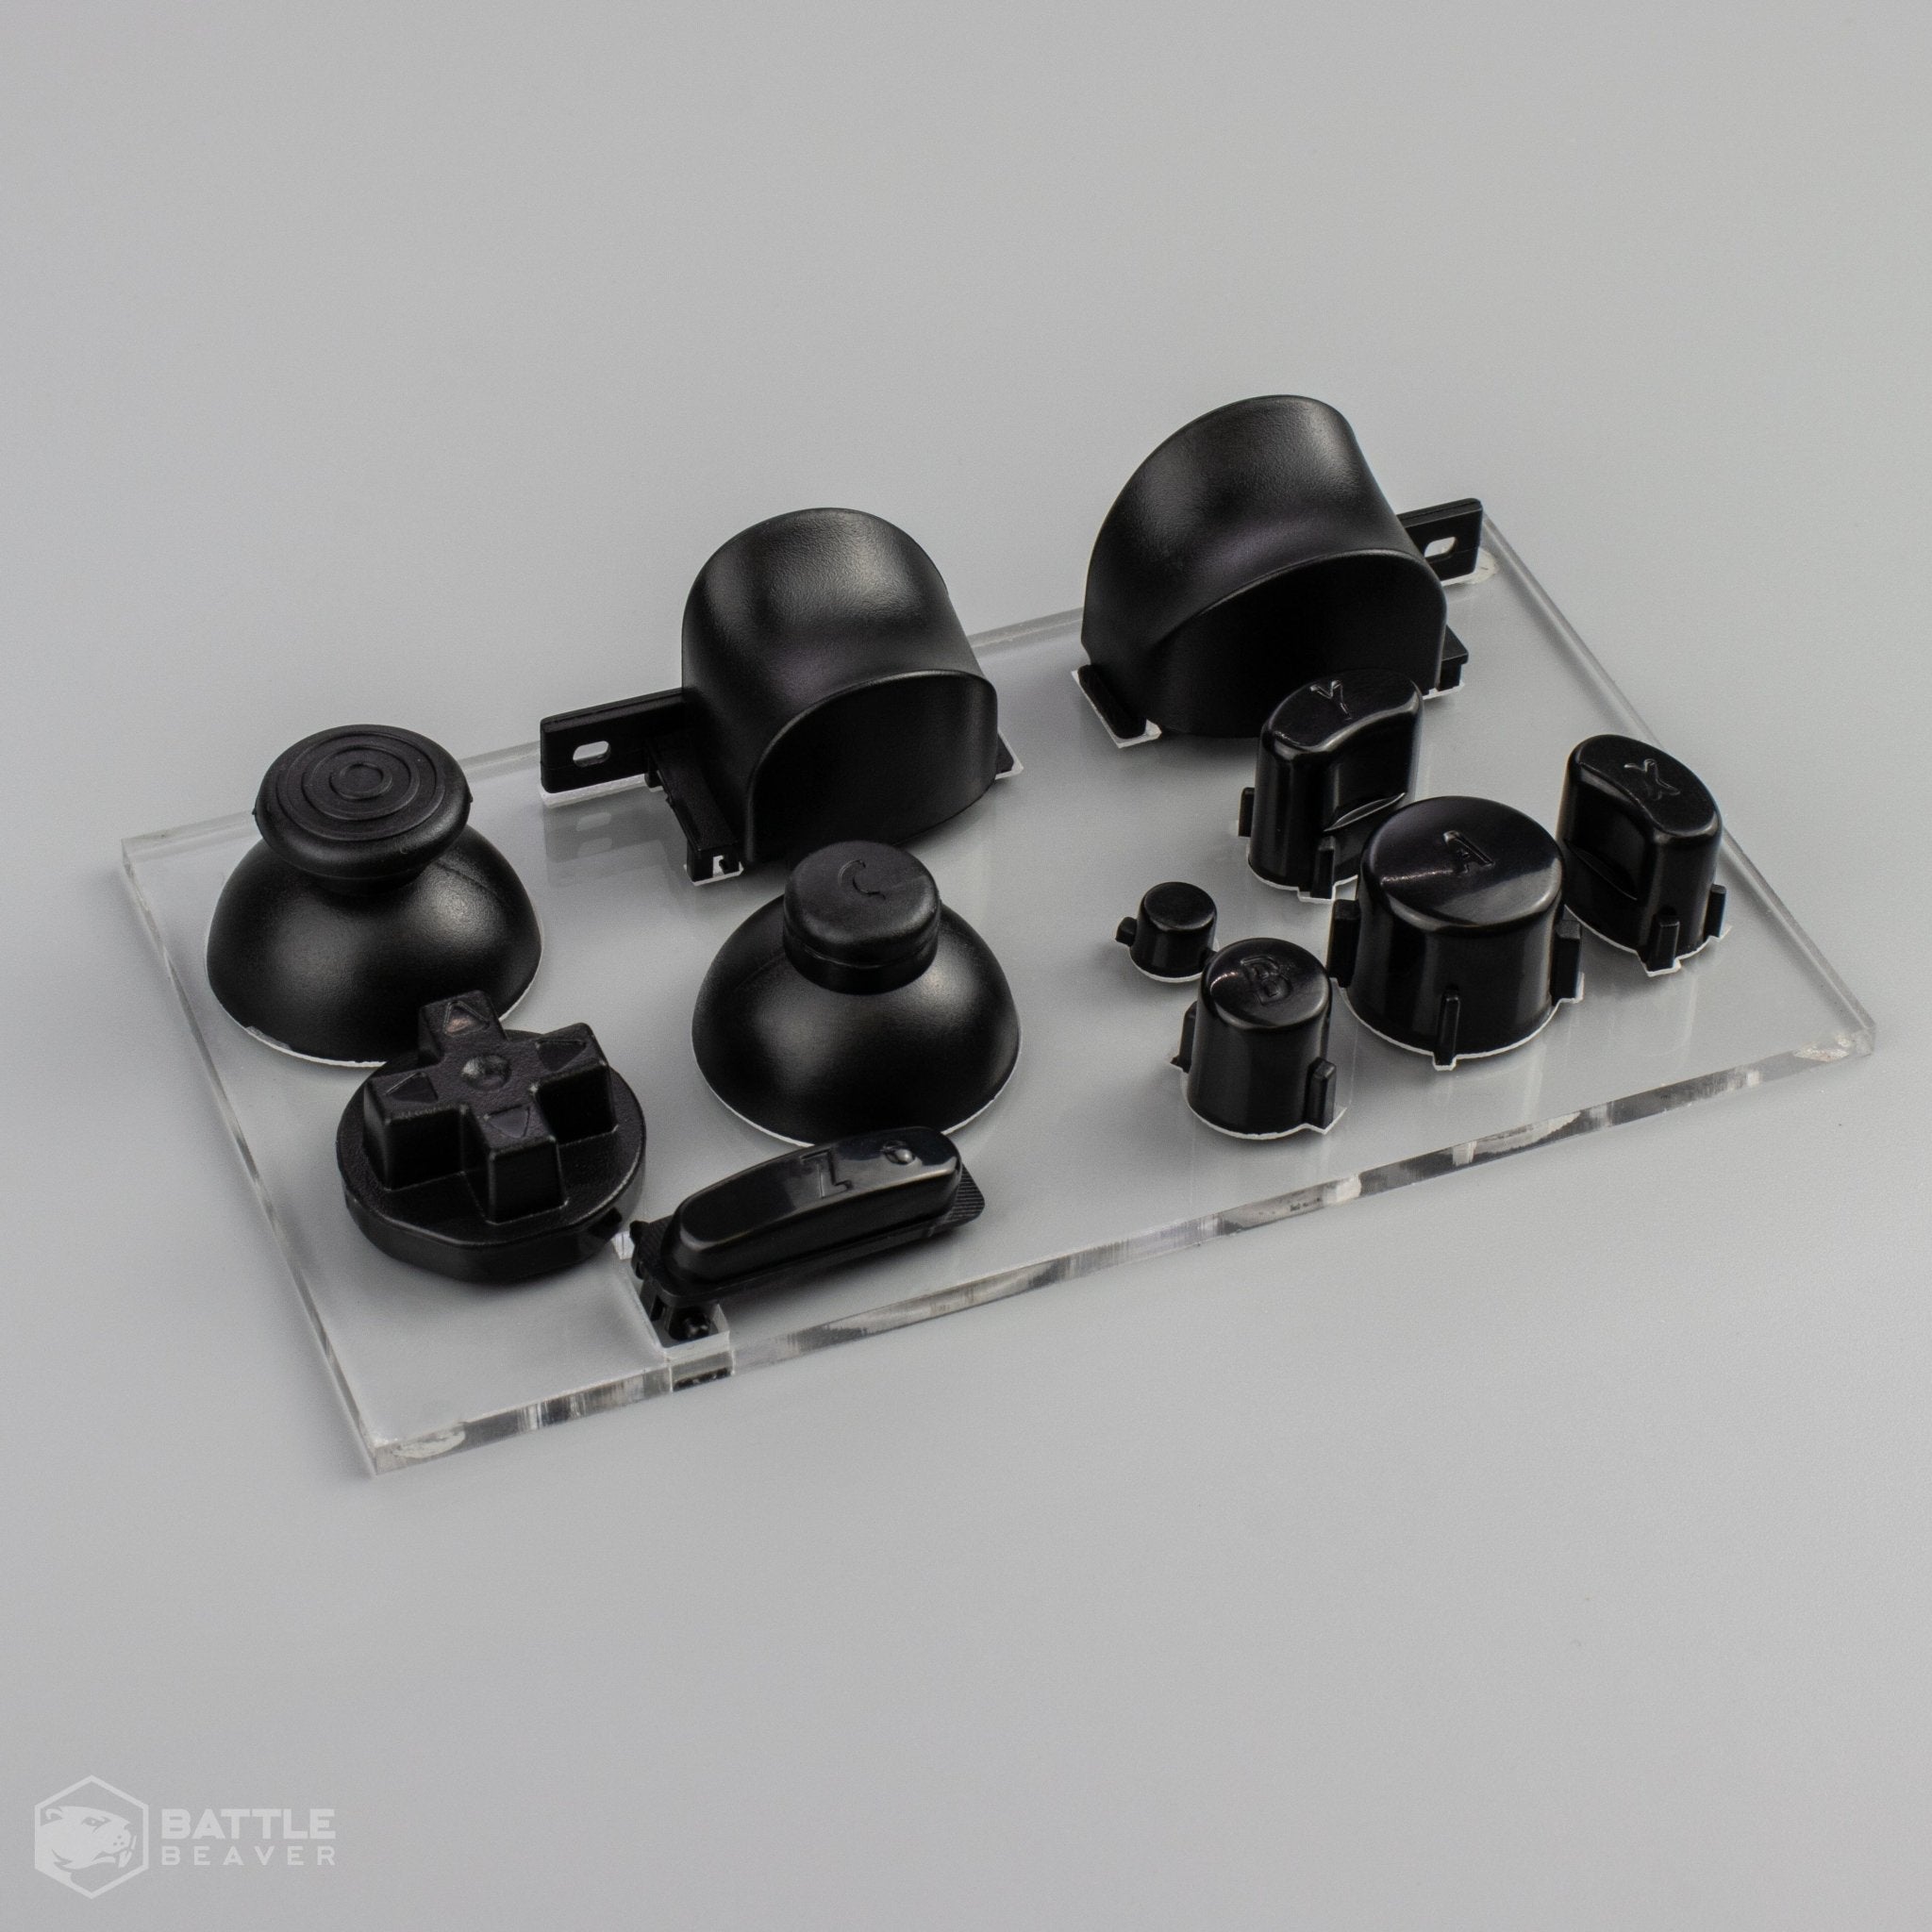 3rd Party Gamecube Parts Kit - Battle Beaver Customs - Black